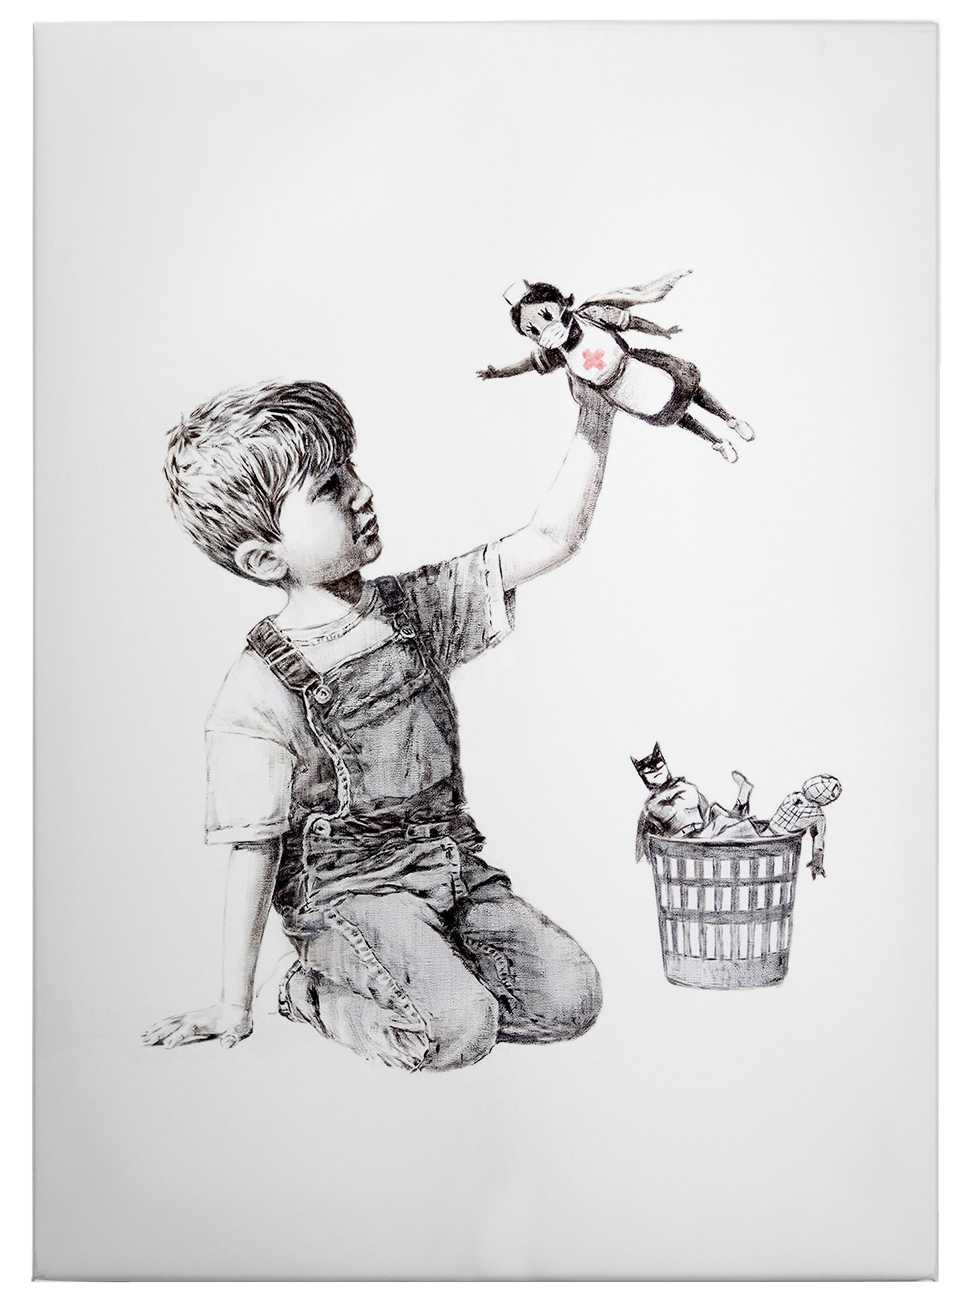             Canvas print Banksy "Real Hero" – black and white
        